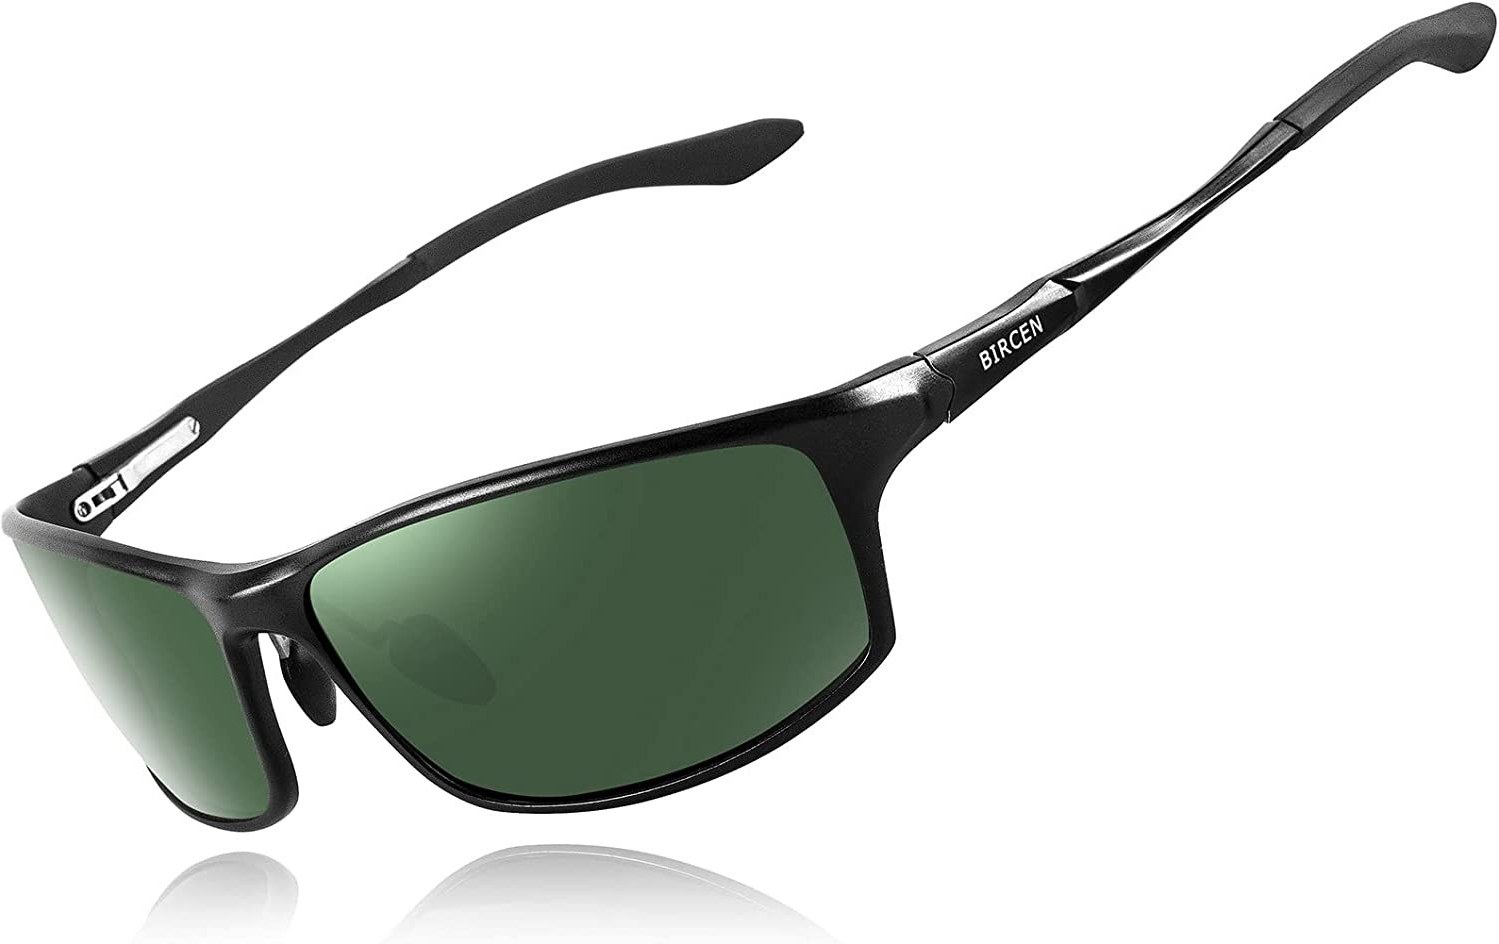 خرید و قیمت BIRCEN Polarized Mens Sunglasses: UV Protection Black Blue  Shades for Men Sport Driving with Al-Mg Metal Frame G-black Frame Green  Lens